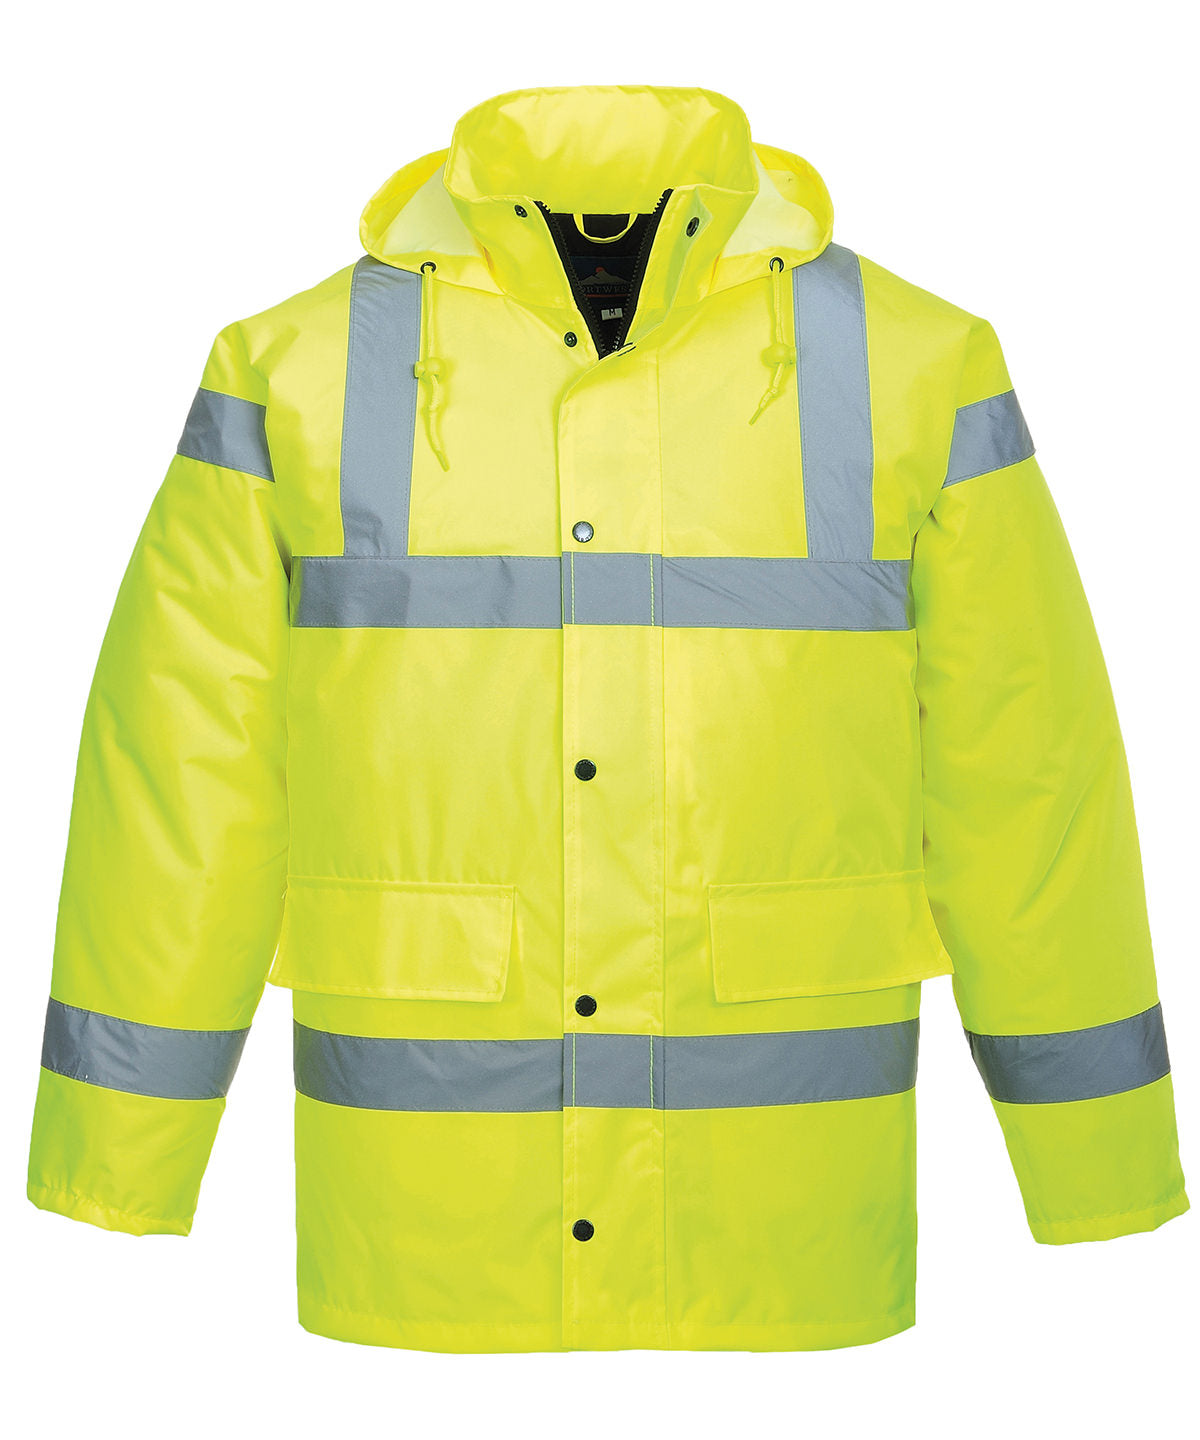 Personalised Jackets - Mid Yellow Portwest Hi-vis traffic jacket (S460)